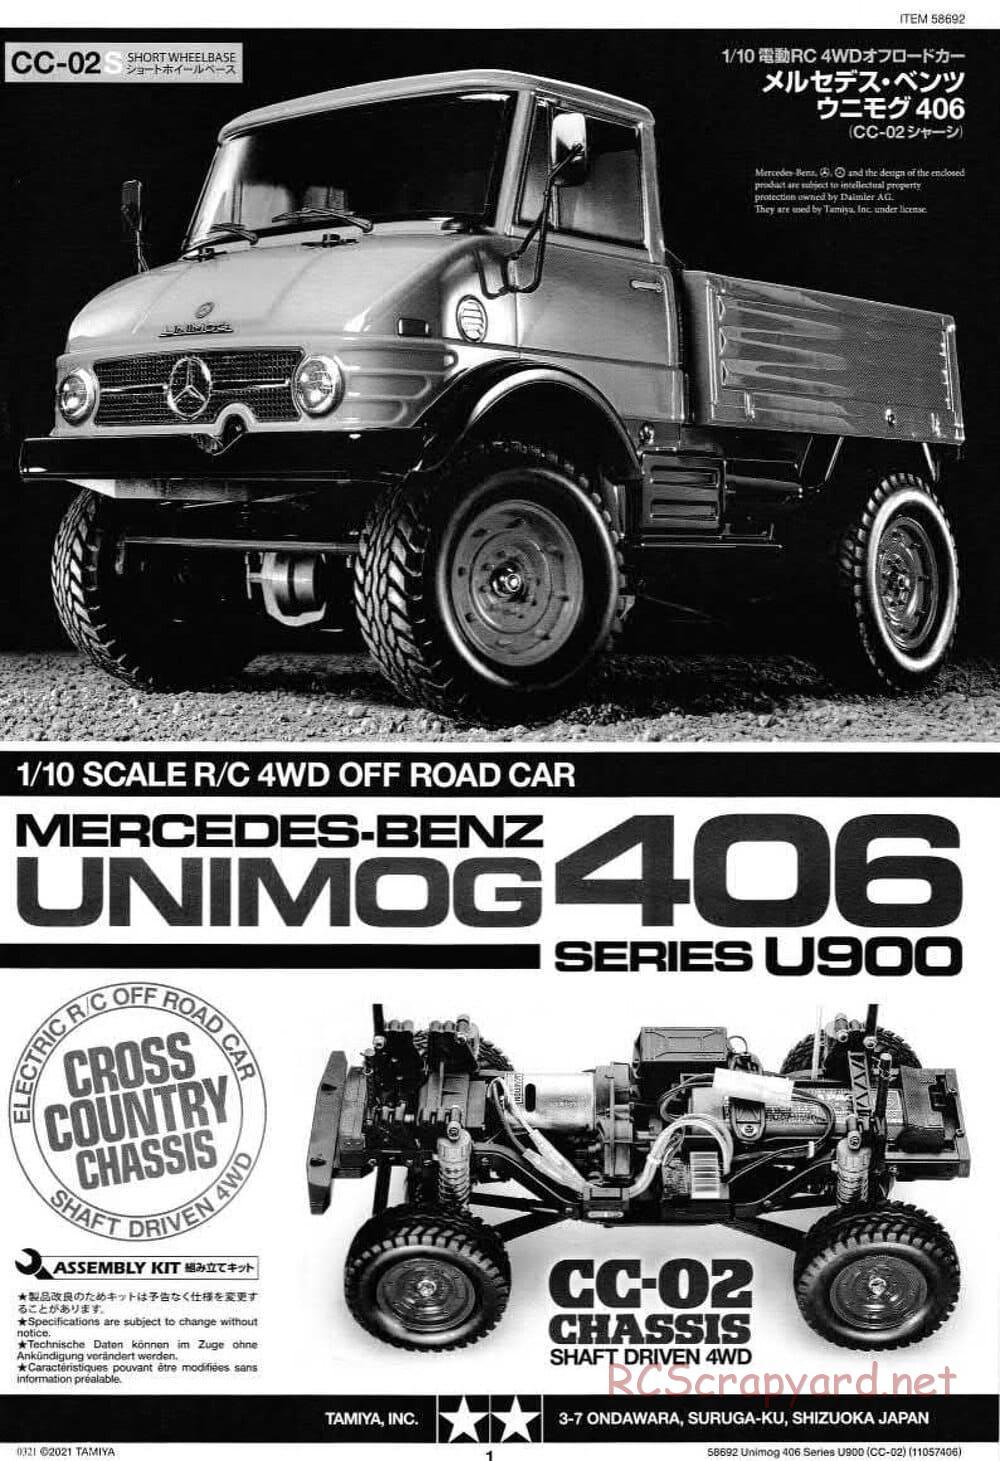 Tamiya - Mercedes-Benz Unimog 406 Series U900 - CC-02 Chassis - Manual - Page 1